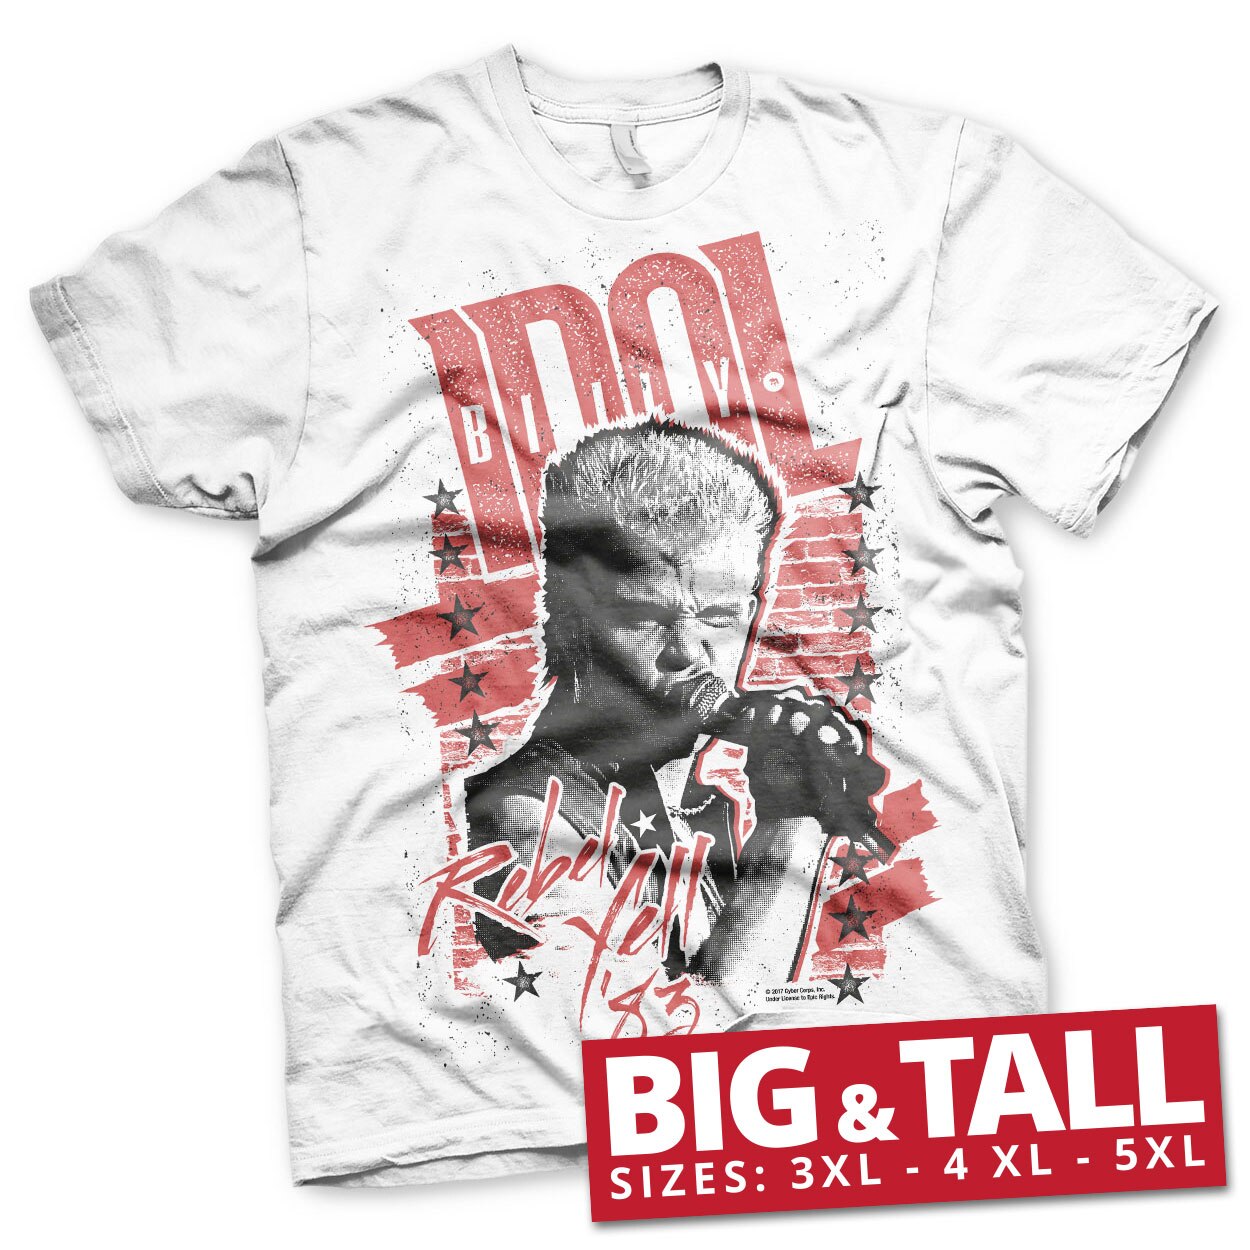 Billy Idol - Rebel Yell '83 Big & Tall T-Shirt